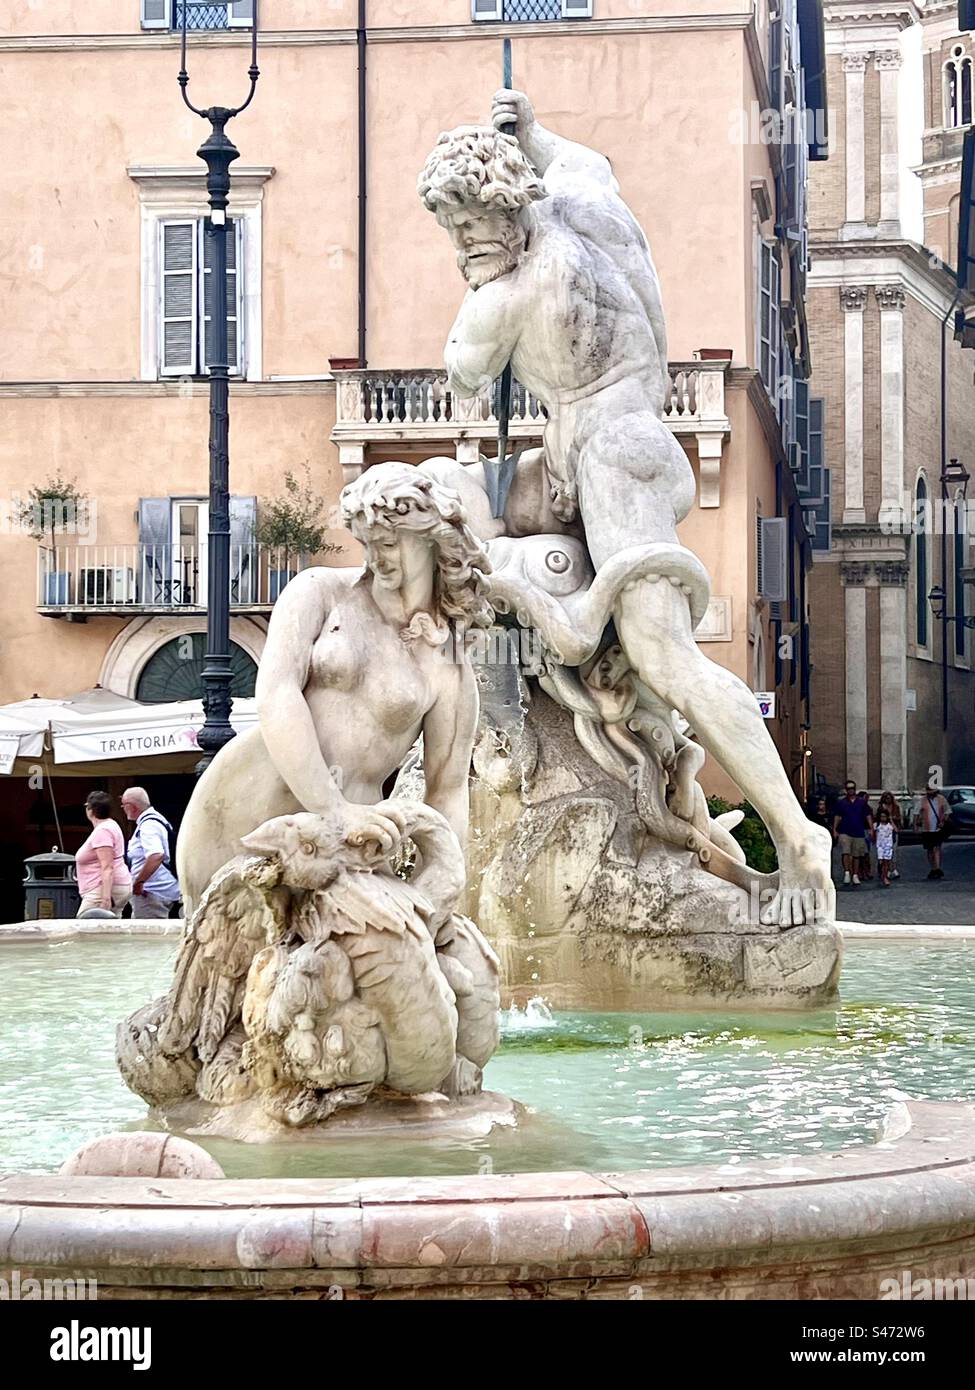 Fountain in Rome’s Navona Square Stock Photo